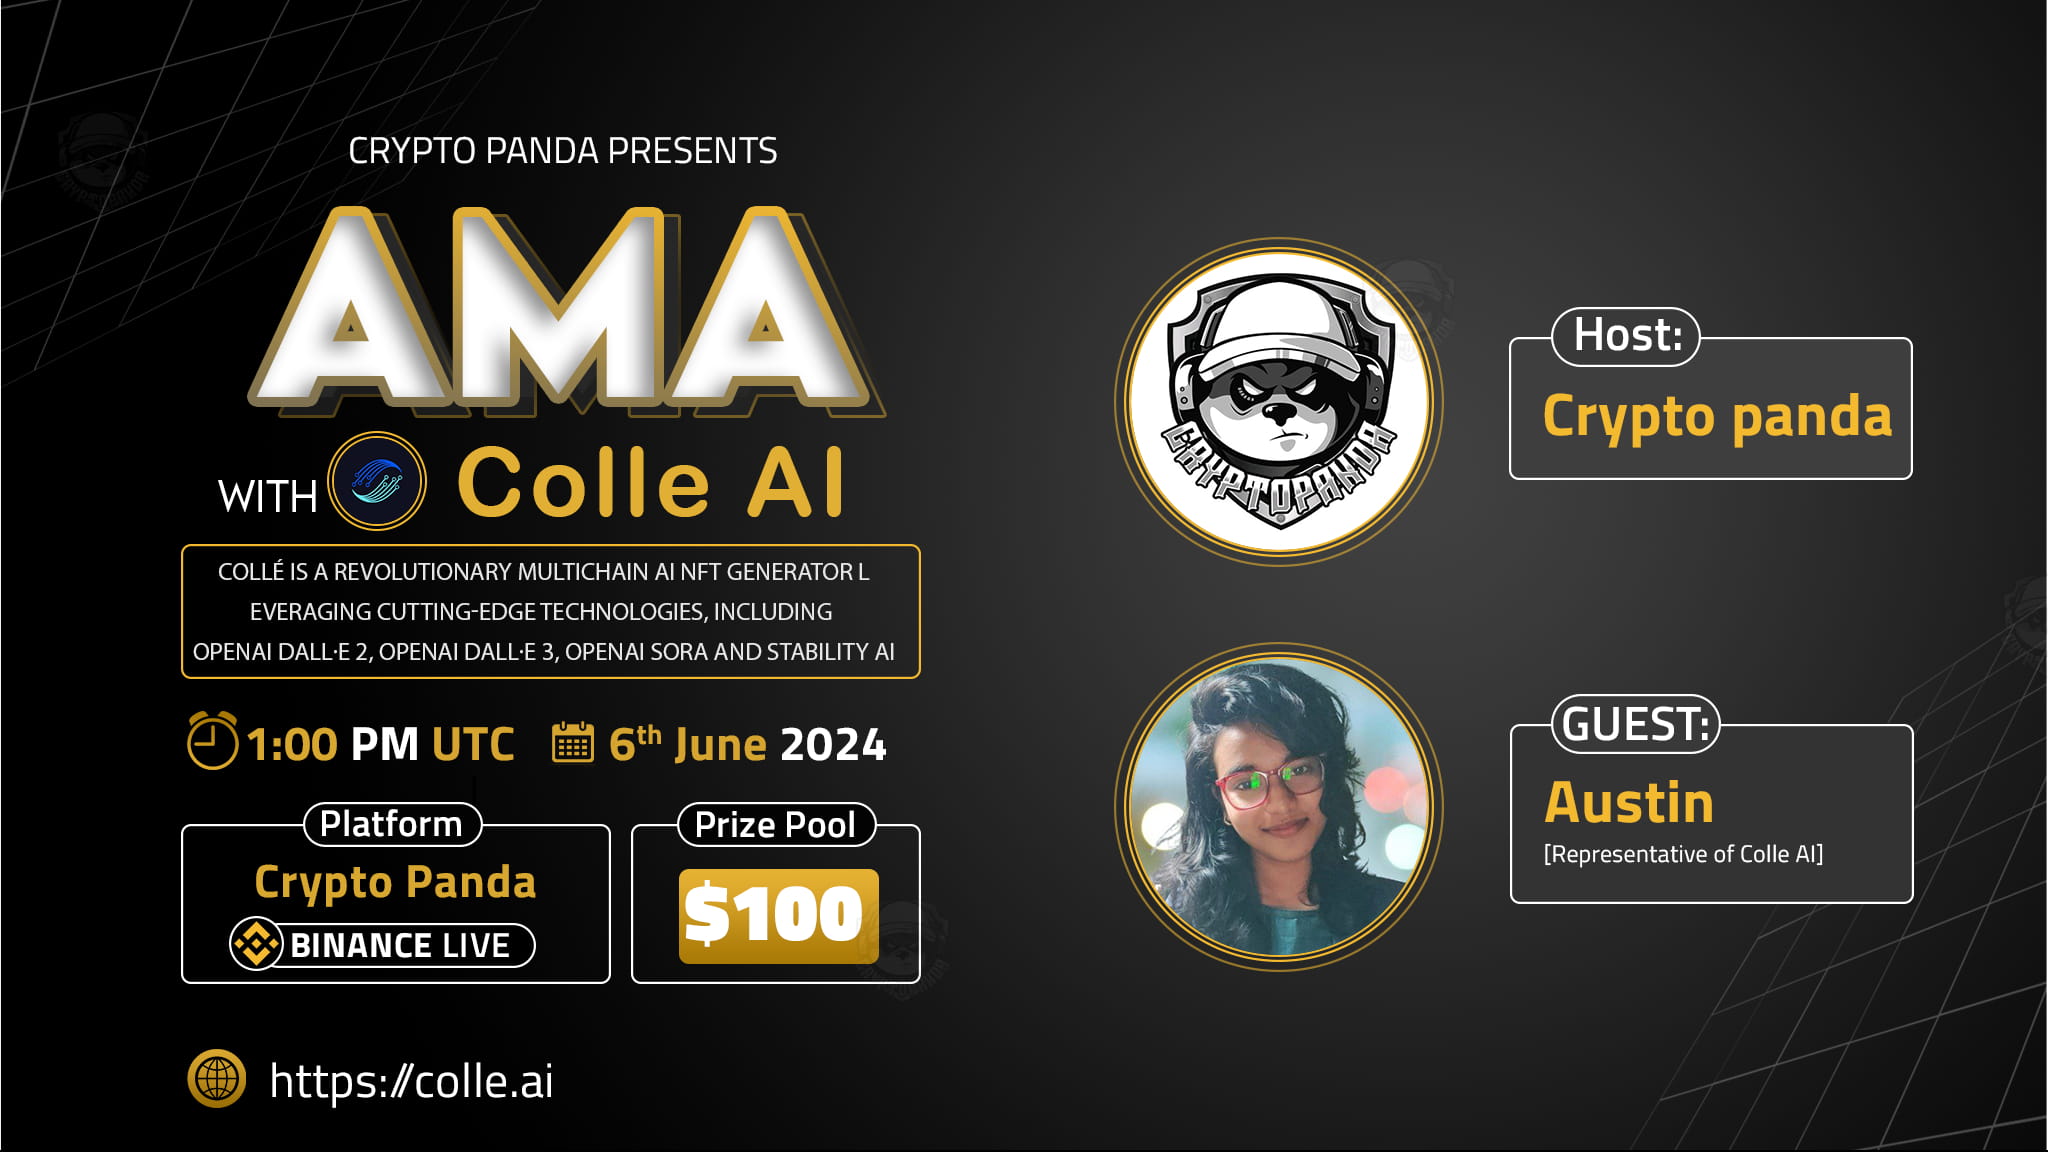 Crypto Panda presents AMA with Colle AI